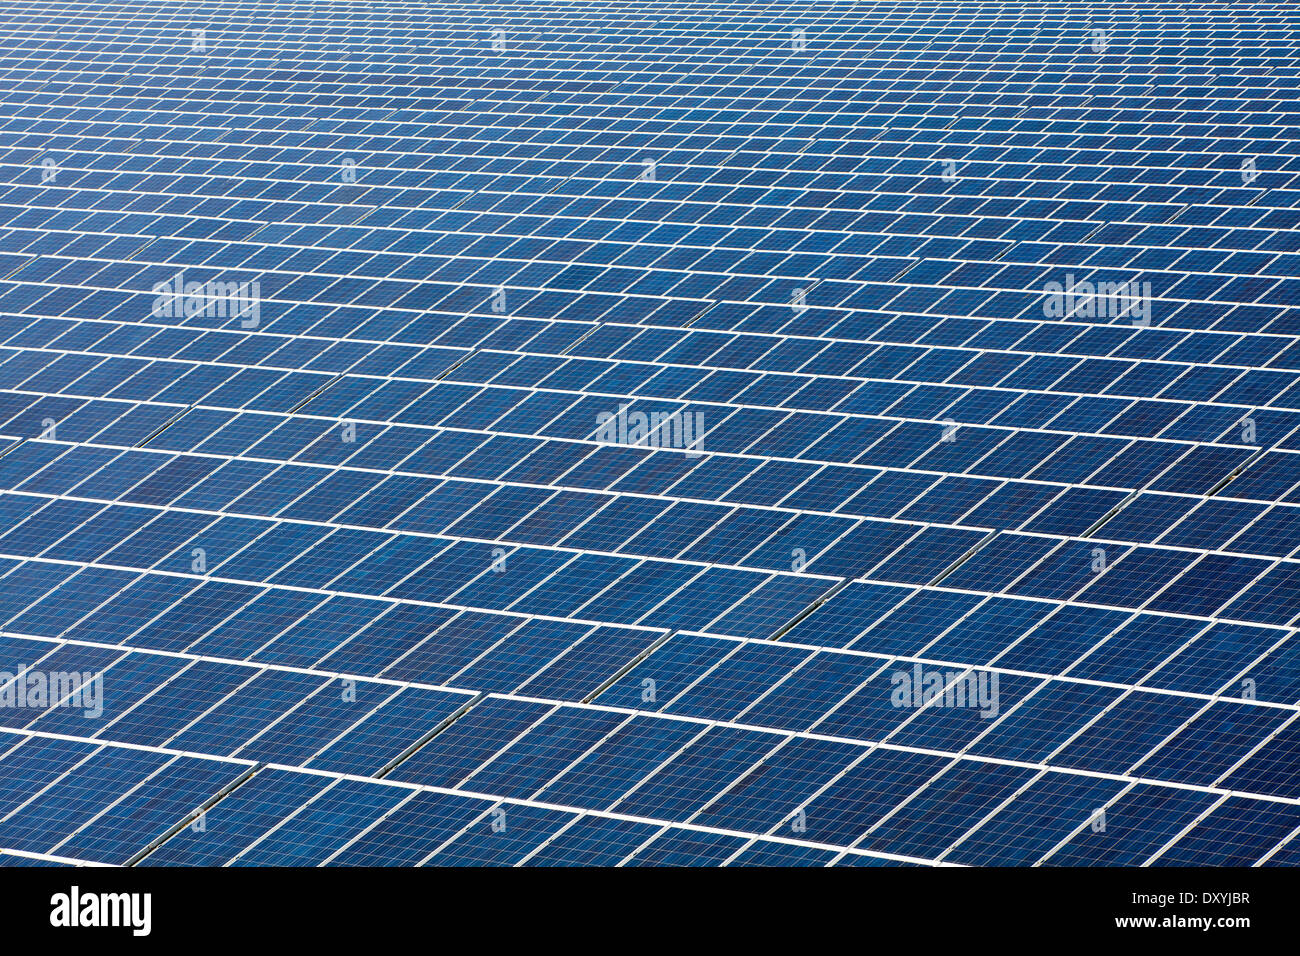 Open space solar photovoltaic plant, Troisdorf Solar, F+S, Troisdorf-Oberlar, Germany, Europe Stock Photo